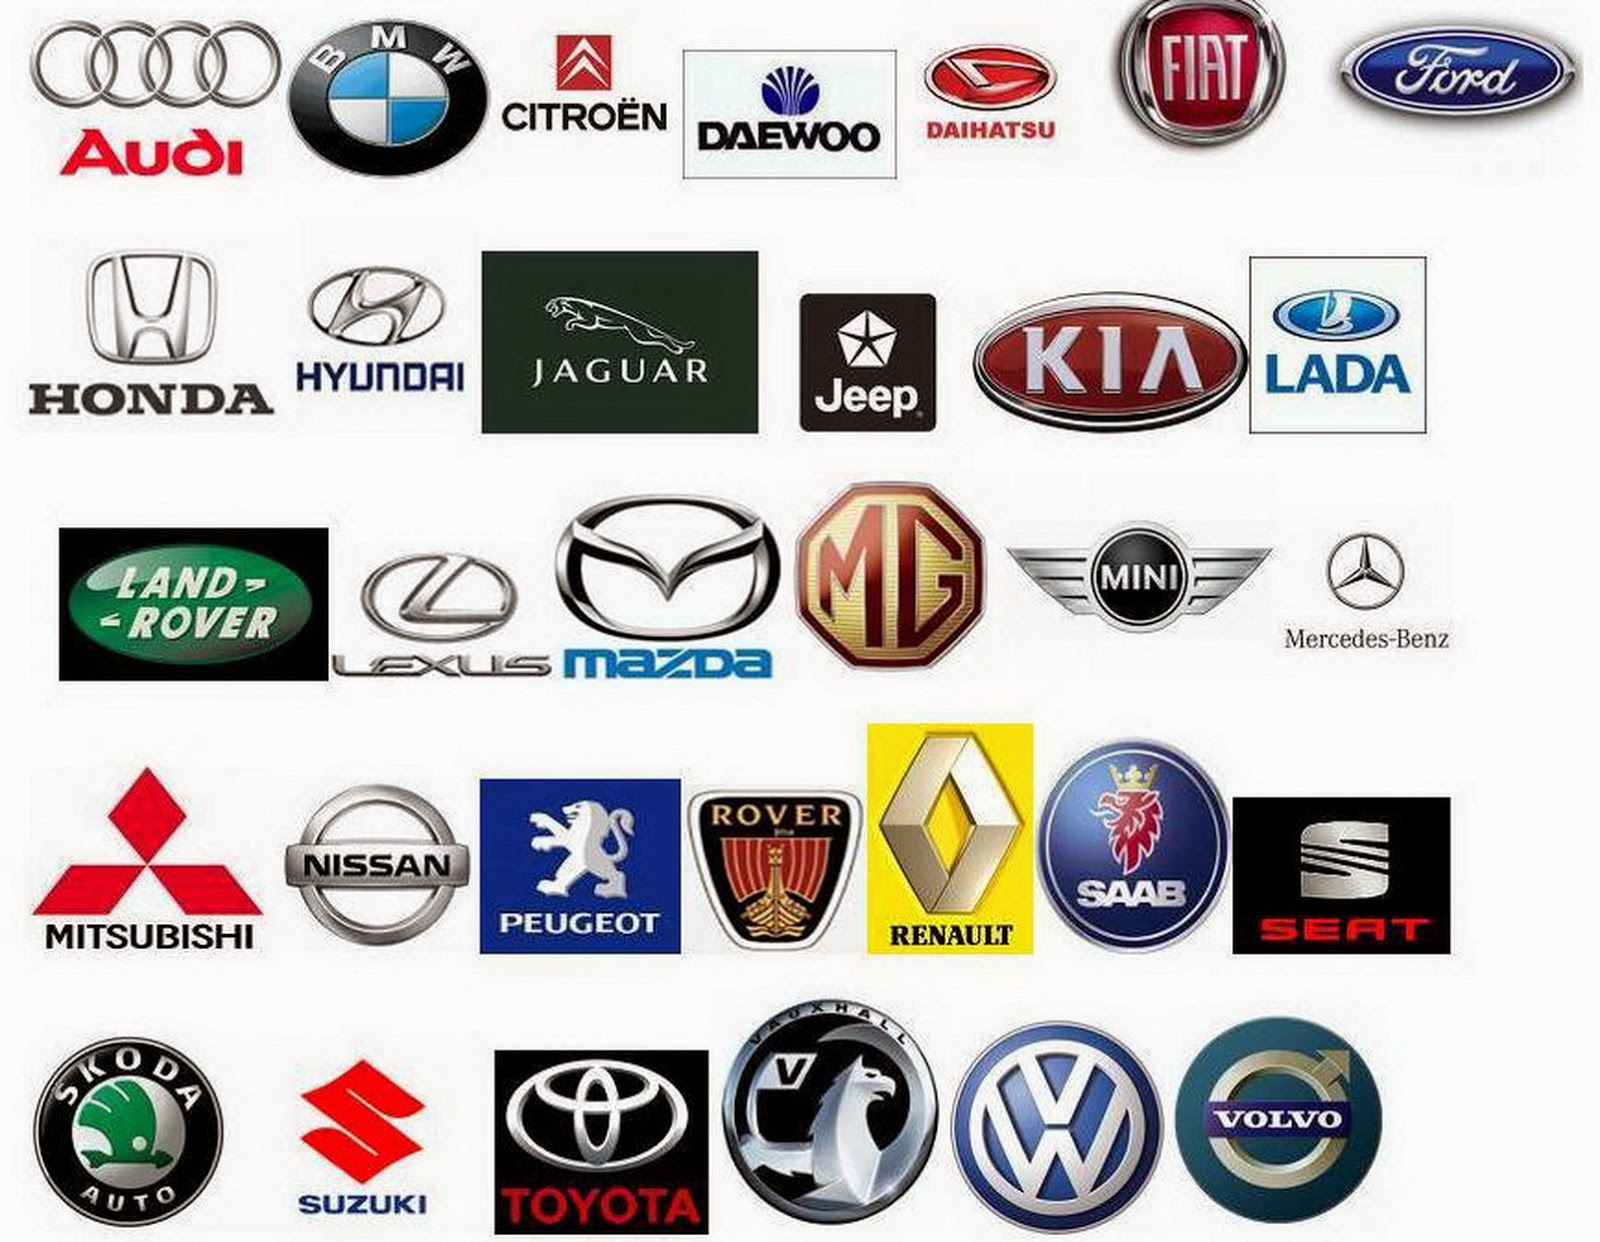 Car company logos - worldofryte